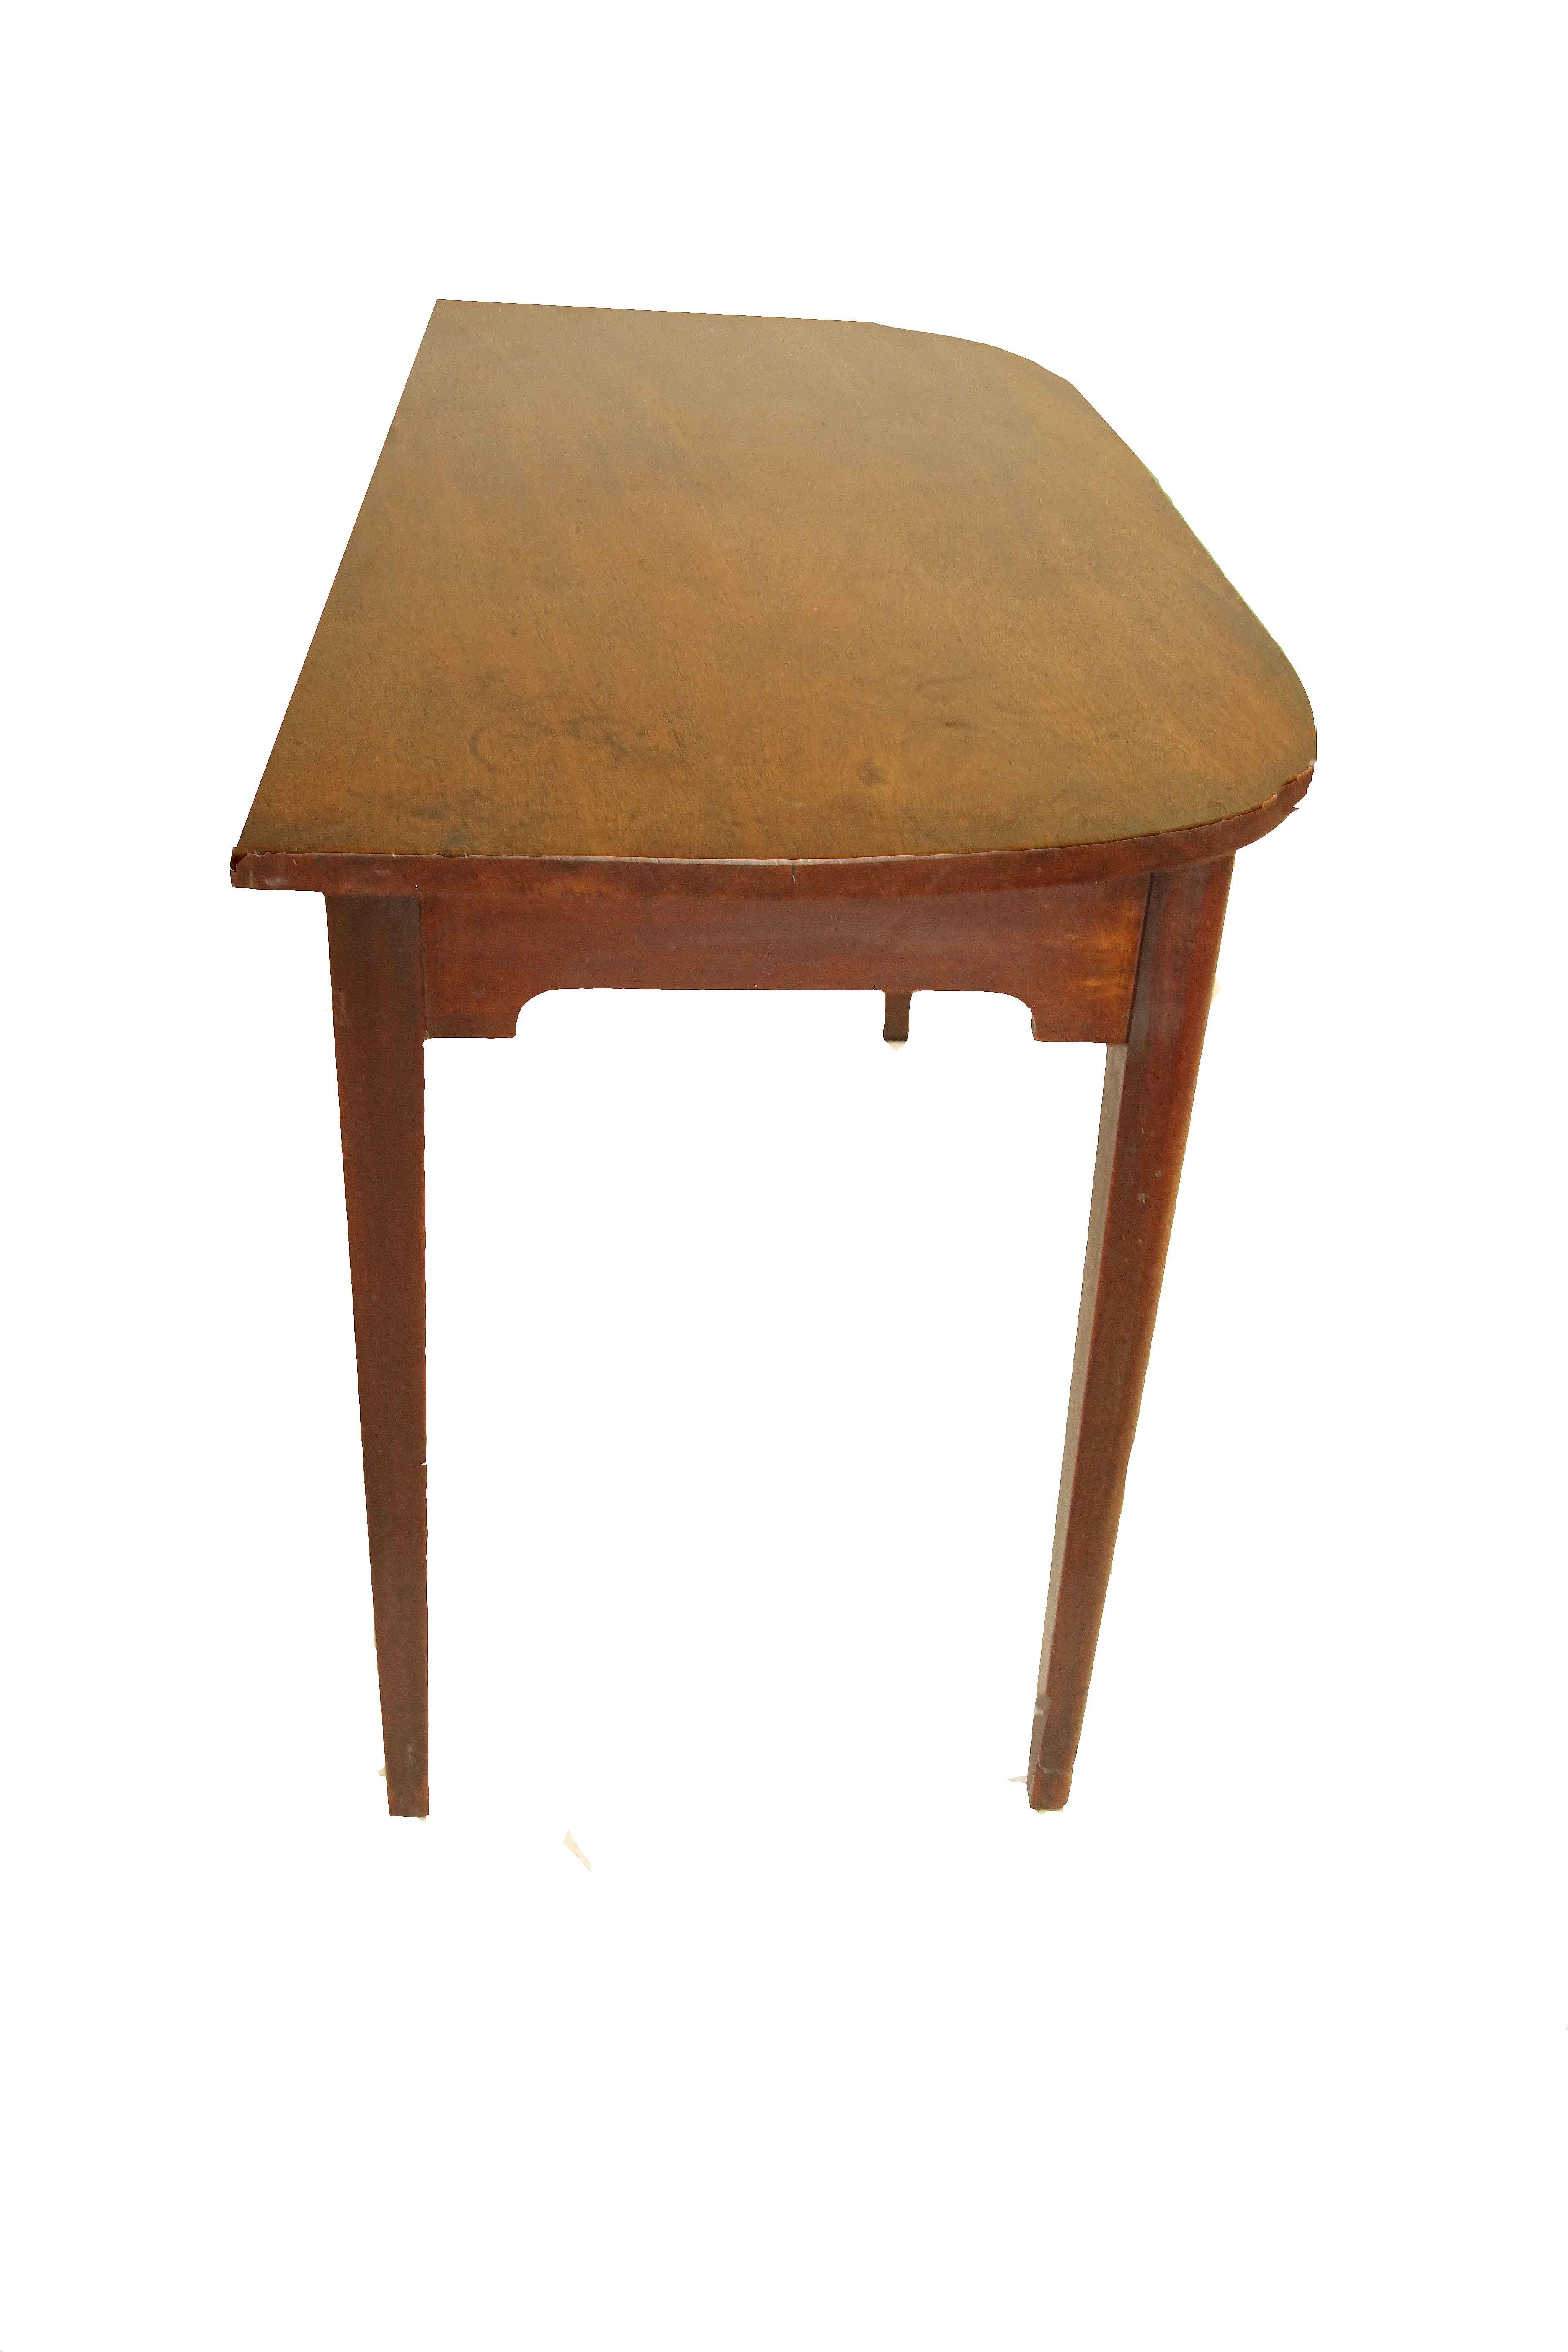 English Hepplewhite Demi-Lune Table For Sale 3